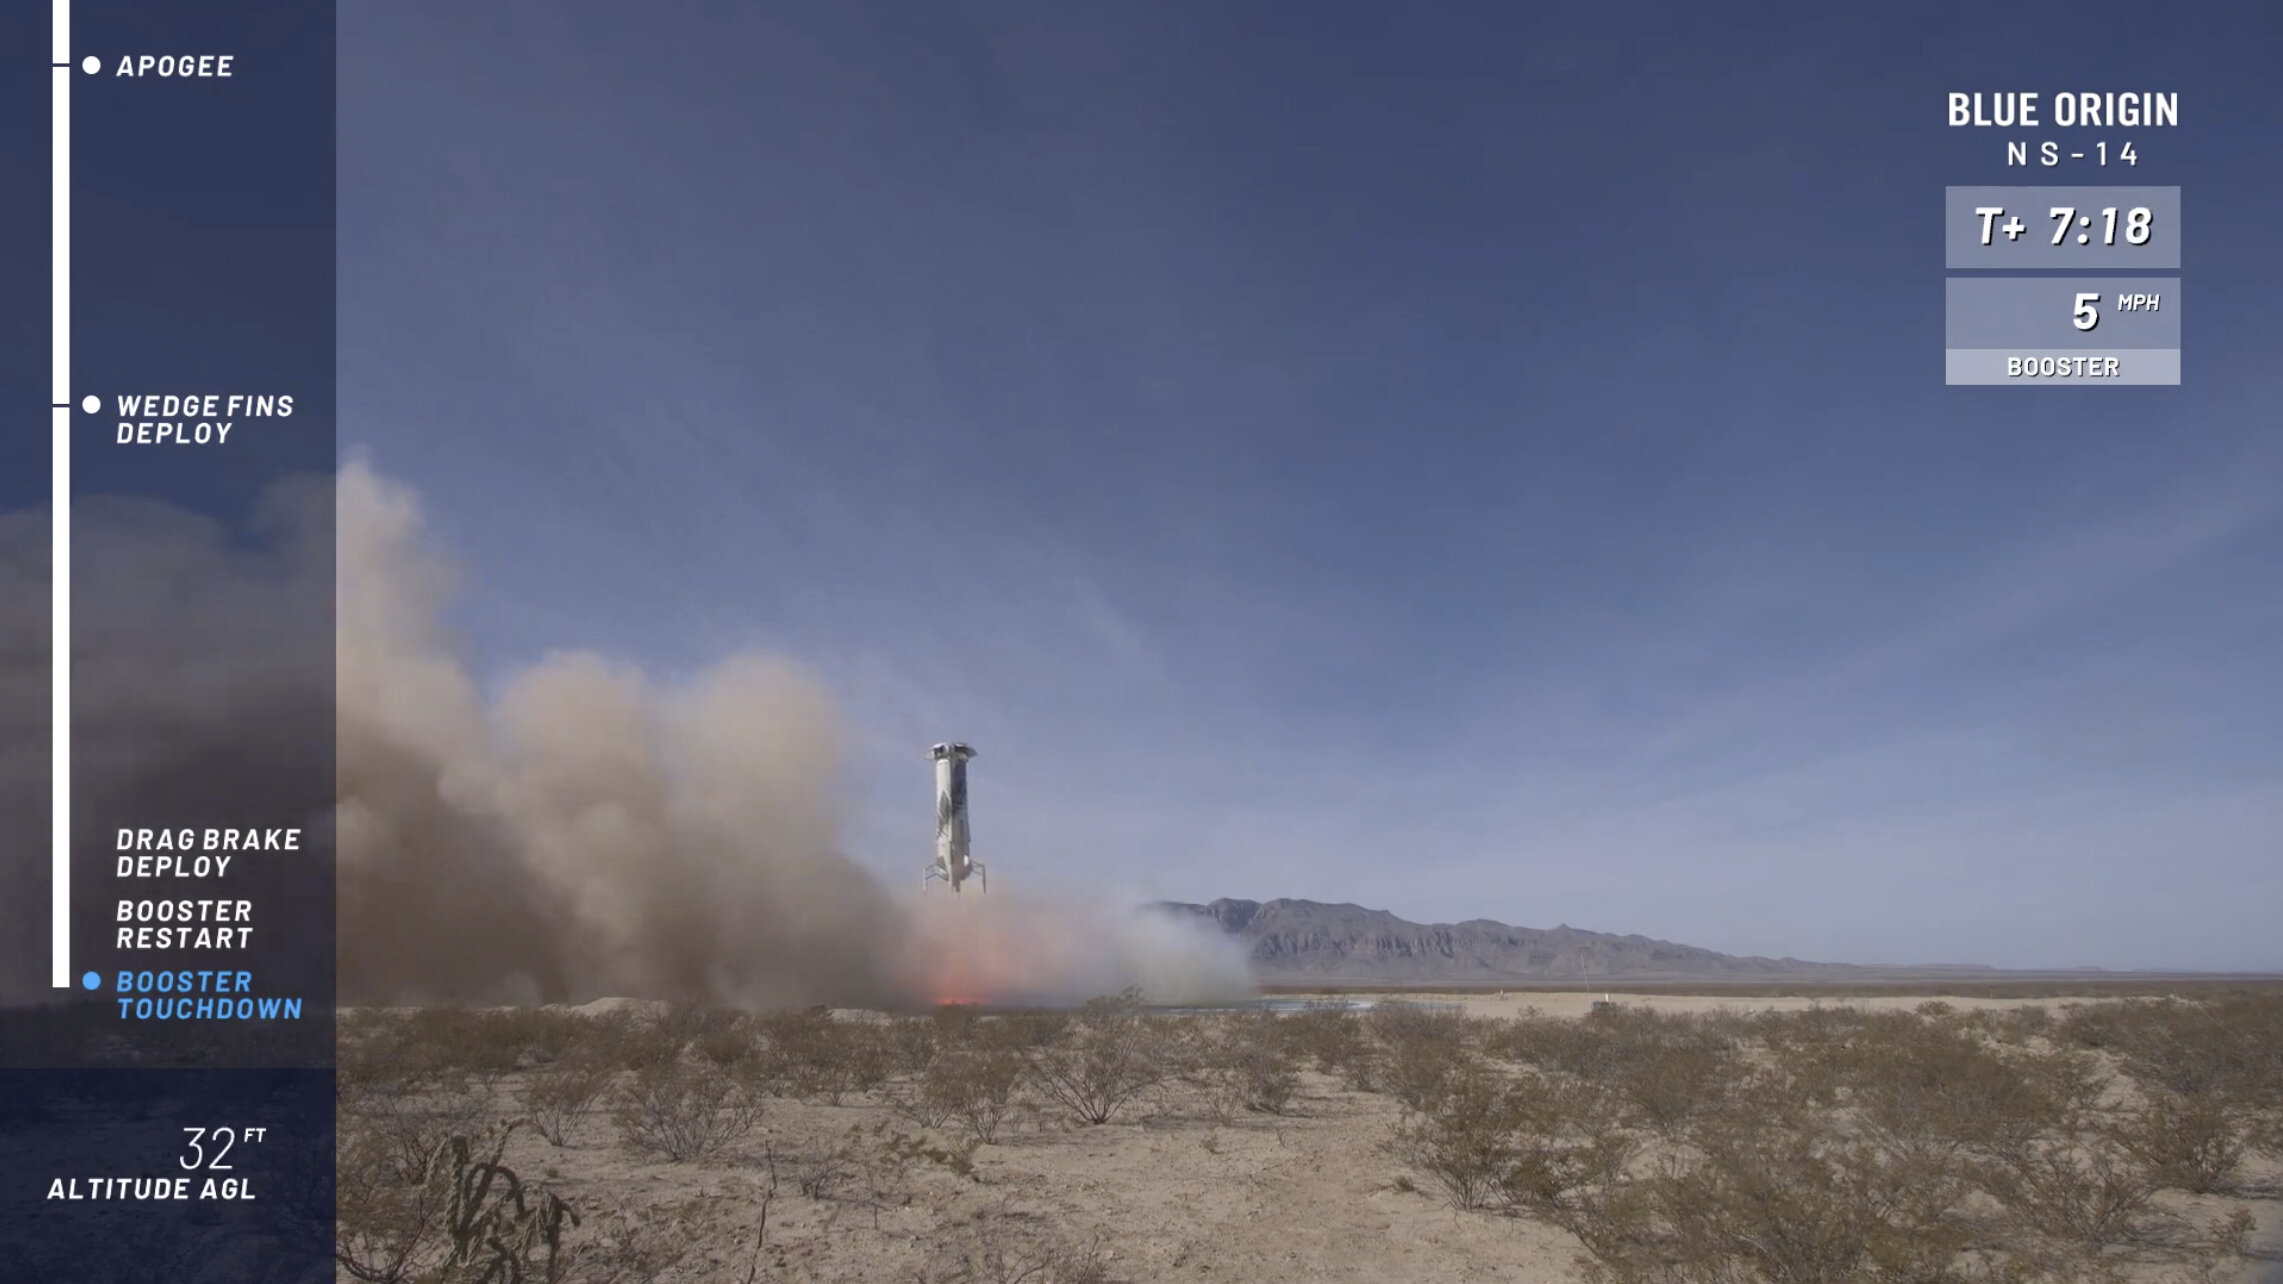 Blue Origin launches capsule into space with astronaut advantages